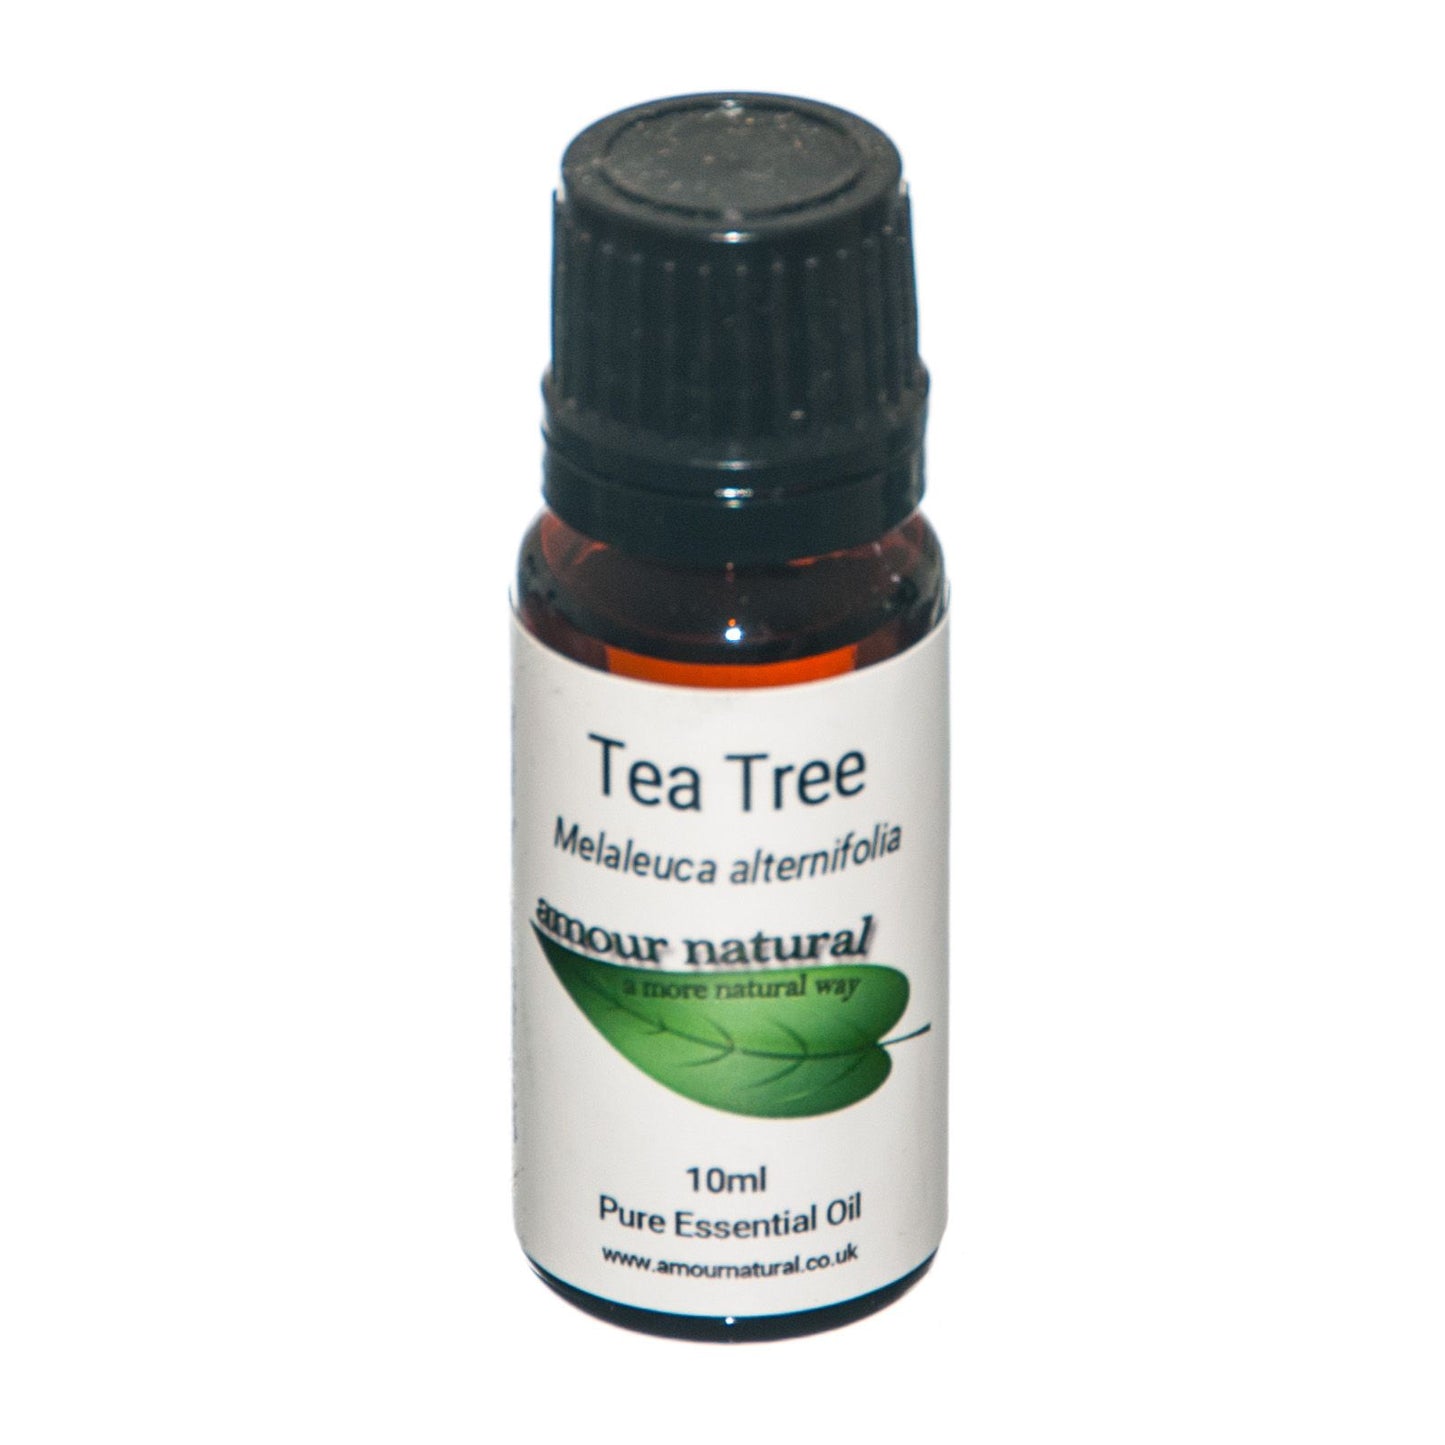 TEA TREE ESSENTIAL OIL (Melaleuca alternifolia)